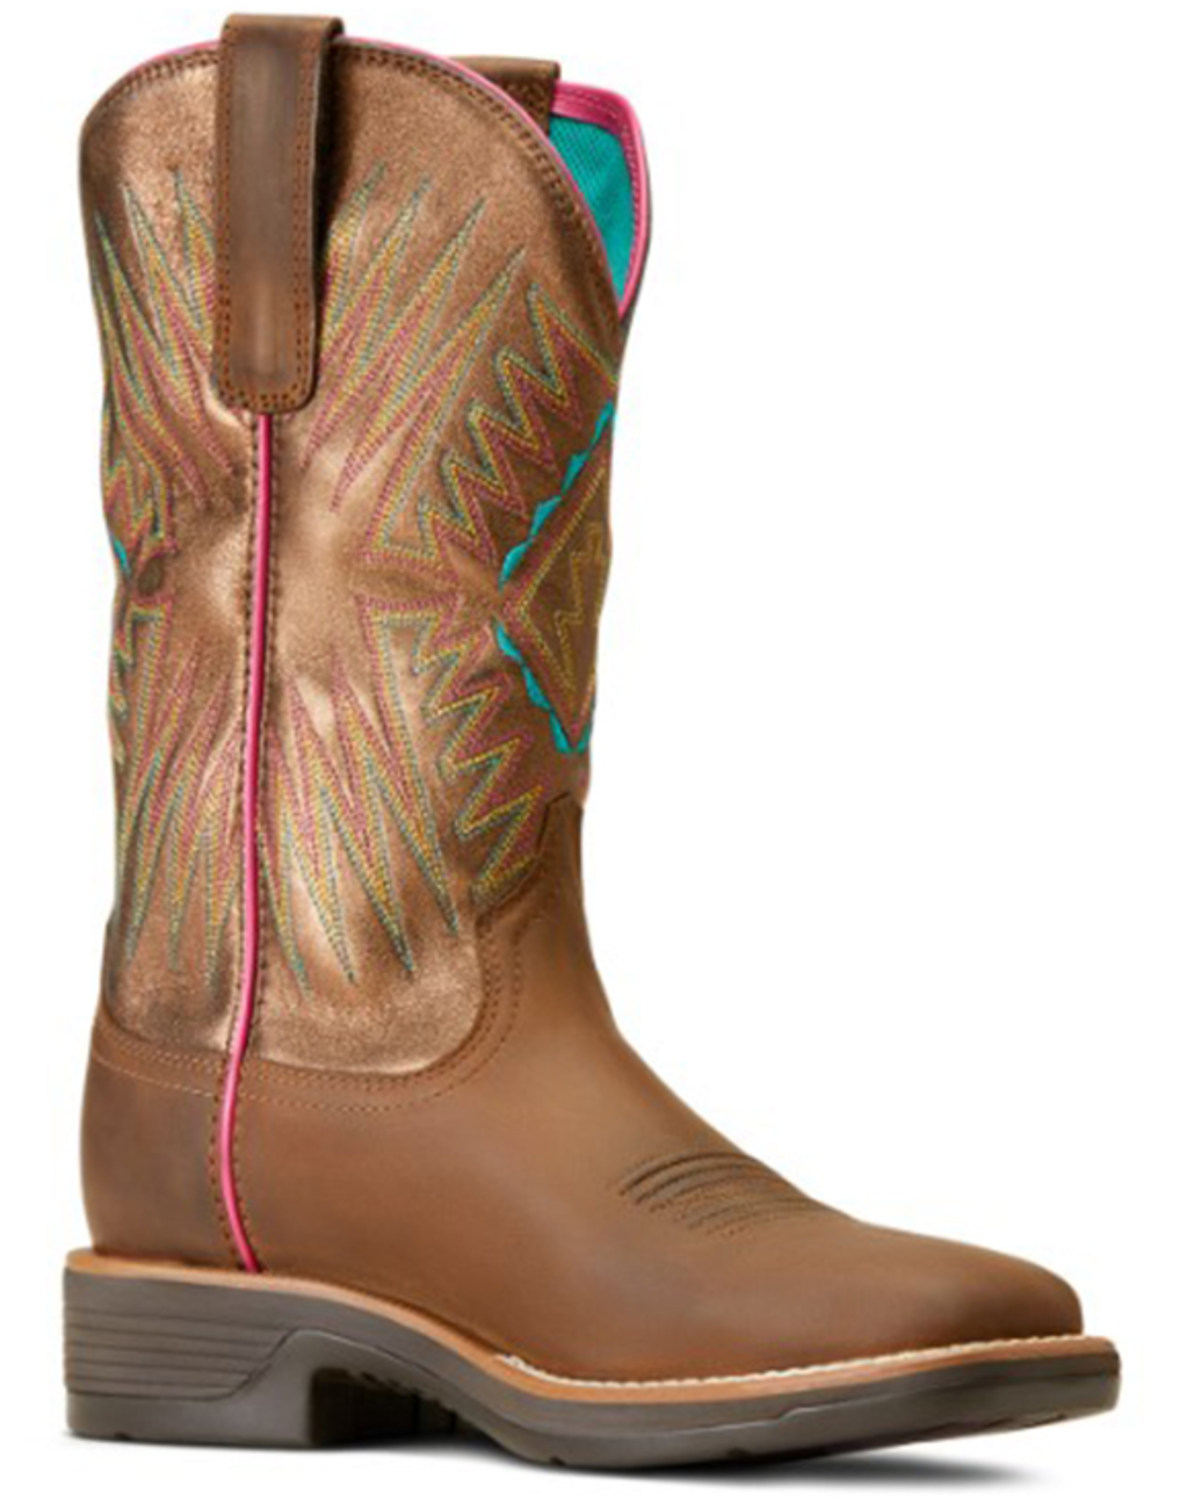 Ariat Women's Ridgeback Distressed Western Boots - Broad Square Toe